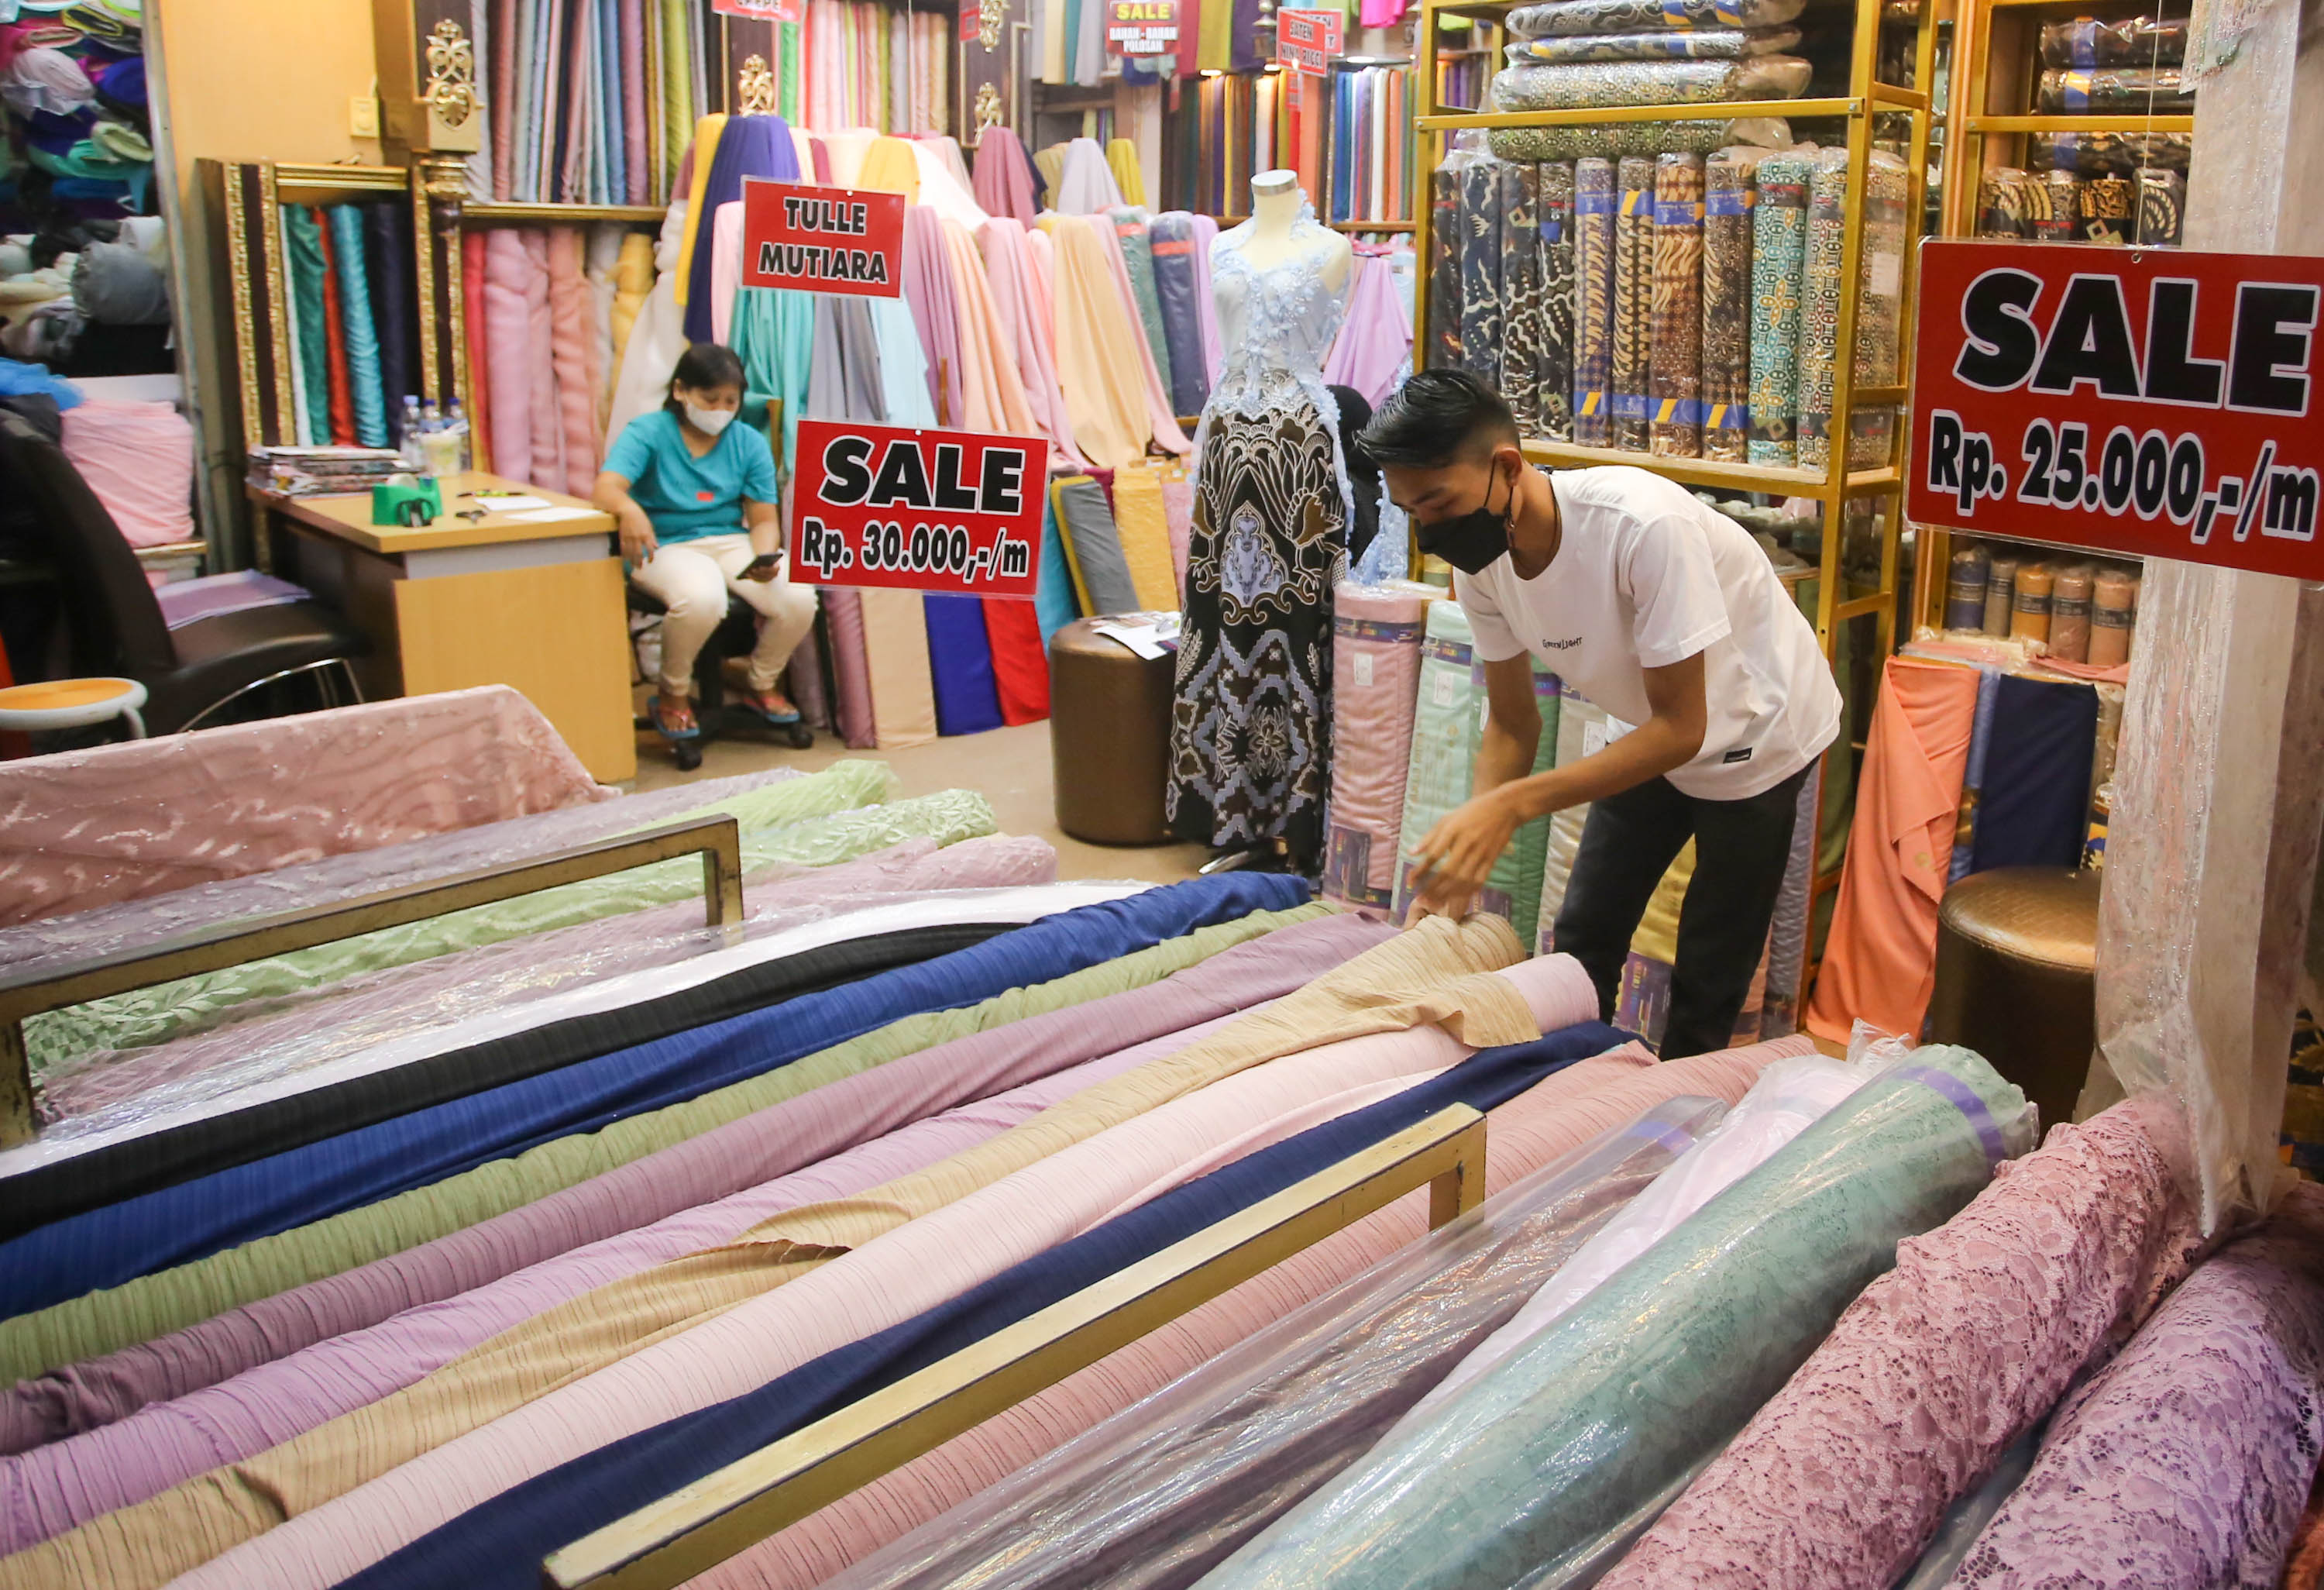 Pedagang menata gulungan kain bahan di kiosnya pusat grosir tekstil Pasar Tanah Abang, Jakarta, Jum'at, 20 Mei 2022. Foto: Ismail Pohan/TrenAsia